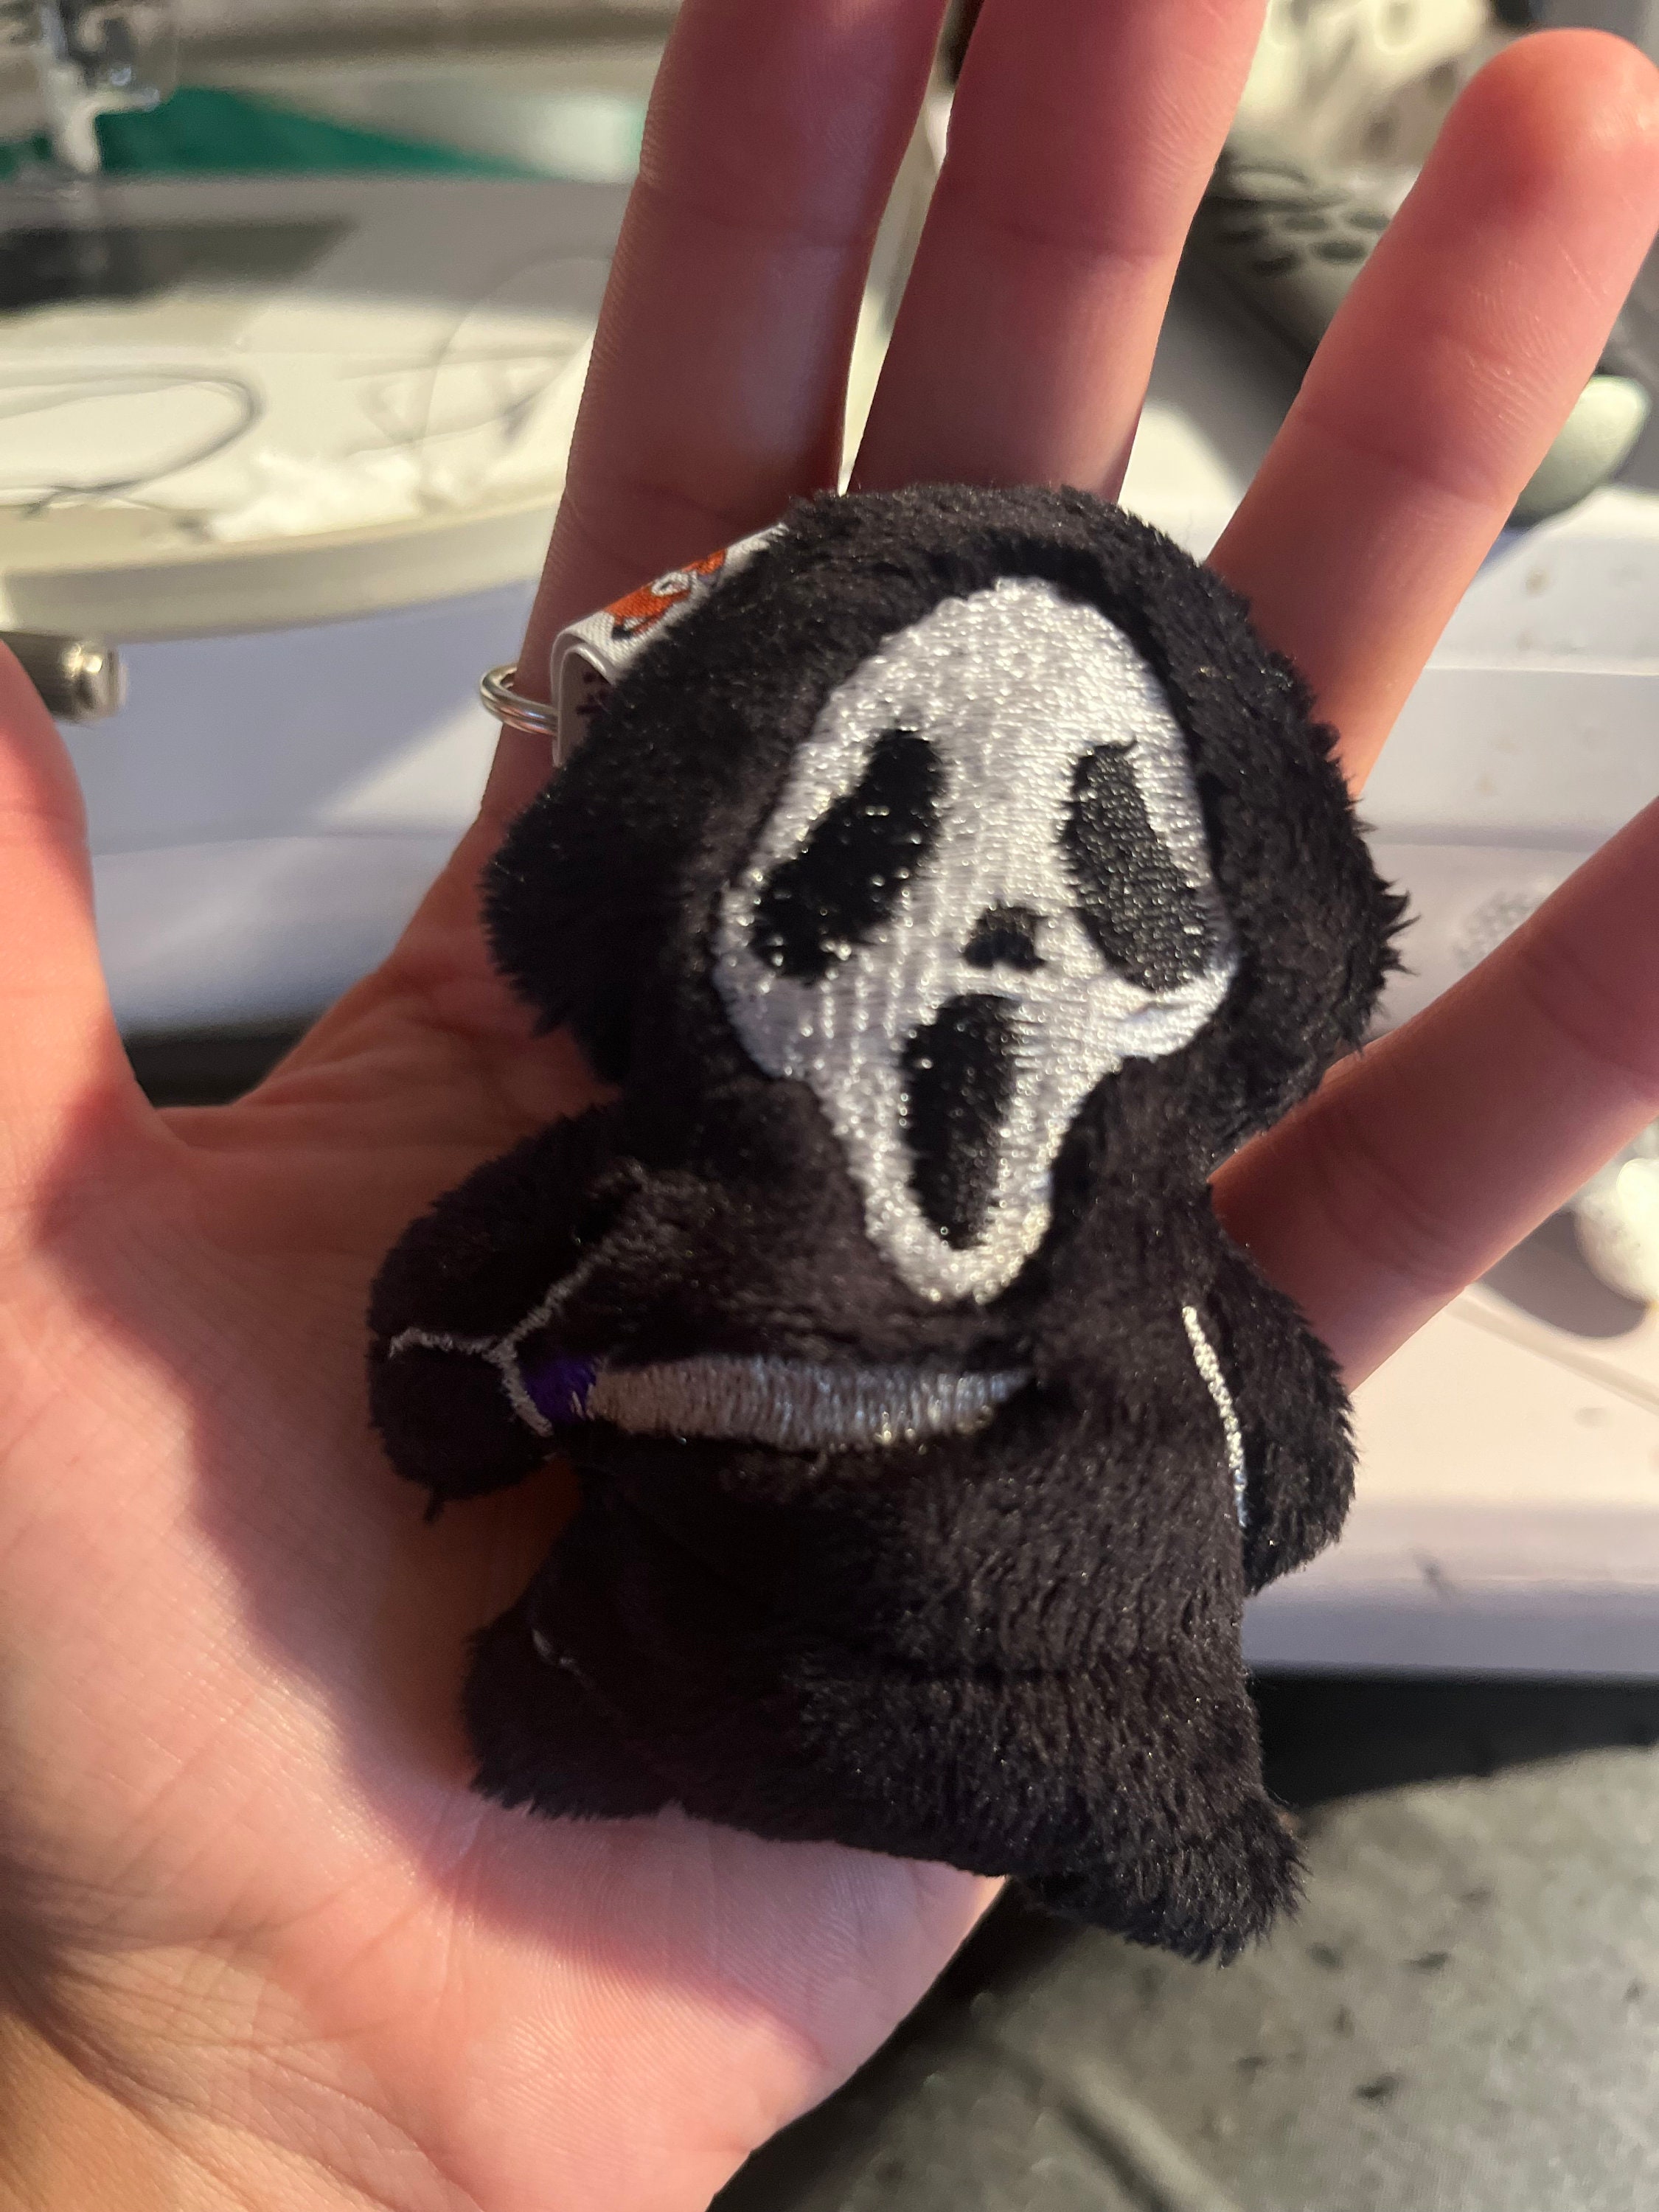 Chibi Horror Ghost Face Plush Keychain 